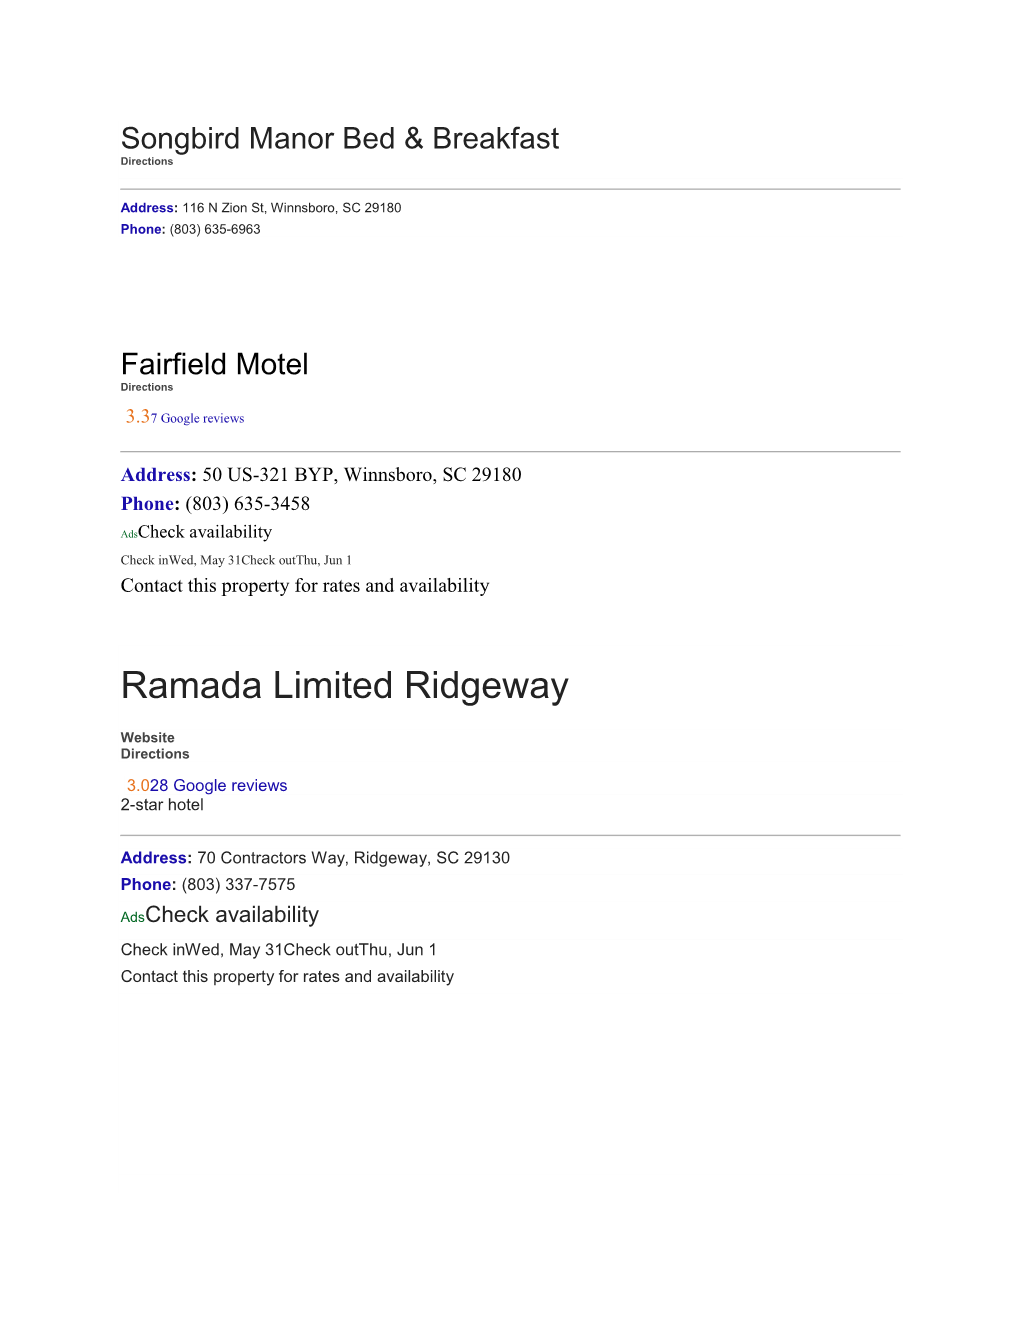 Ramada Limited Ridgeway